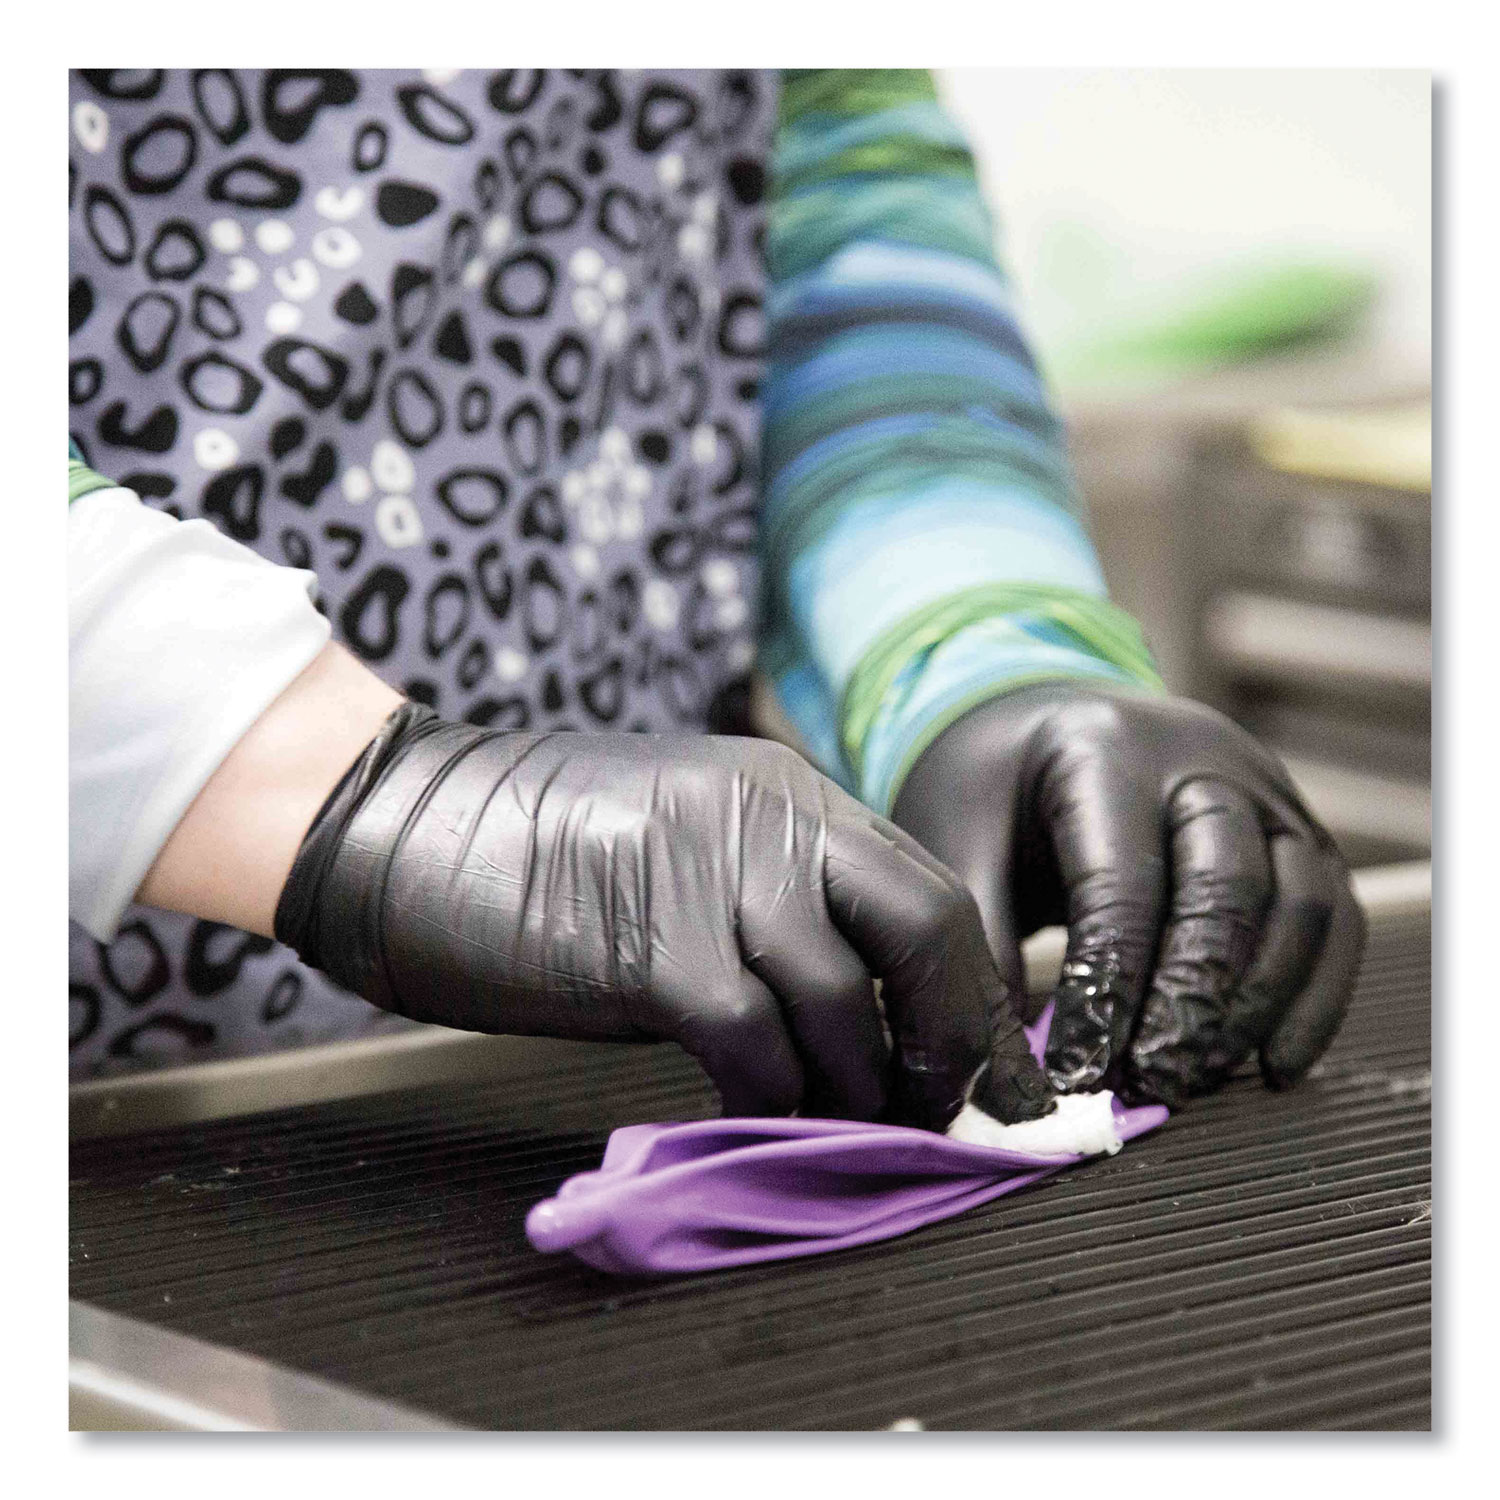  ABC - Guantes de trabajo de PVC de doble cara de 10 pulgadas,  paquete de 24 guantes de punto de PVC, guantes de algodón transpirable con  puntos de goma, guantes de